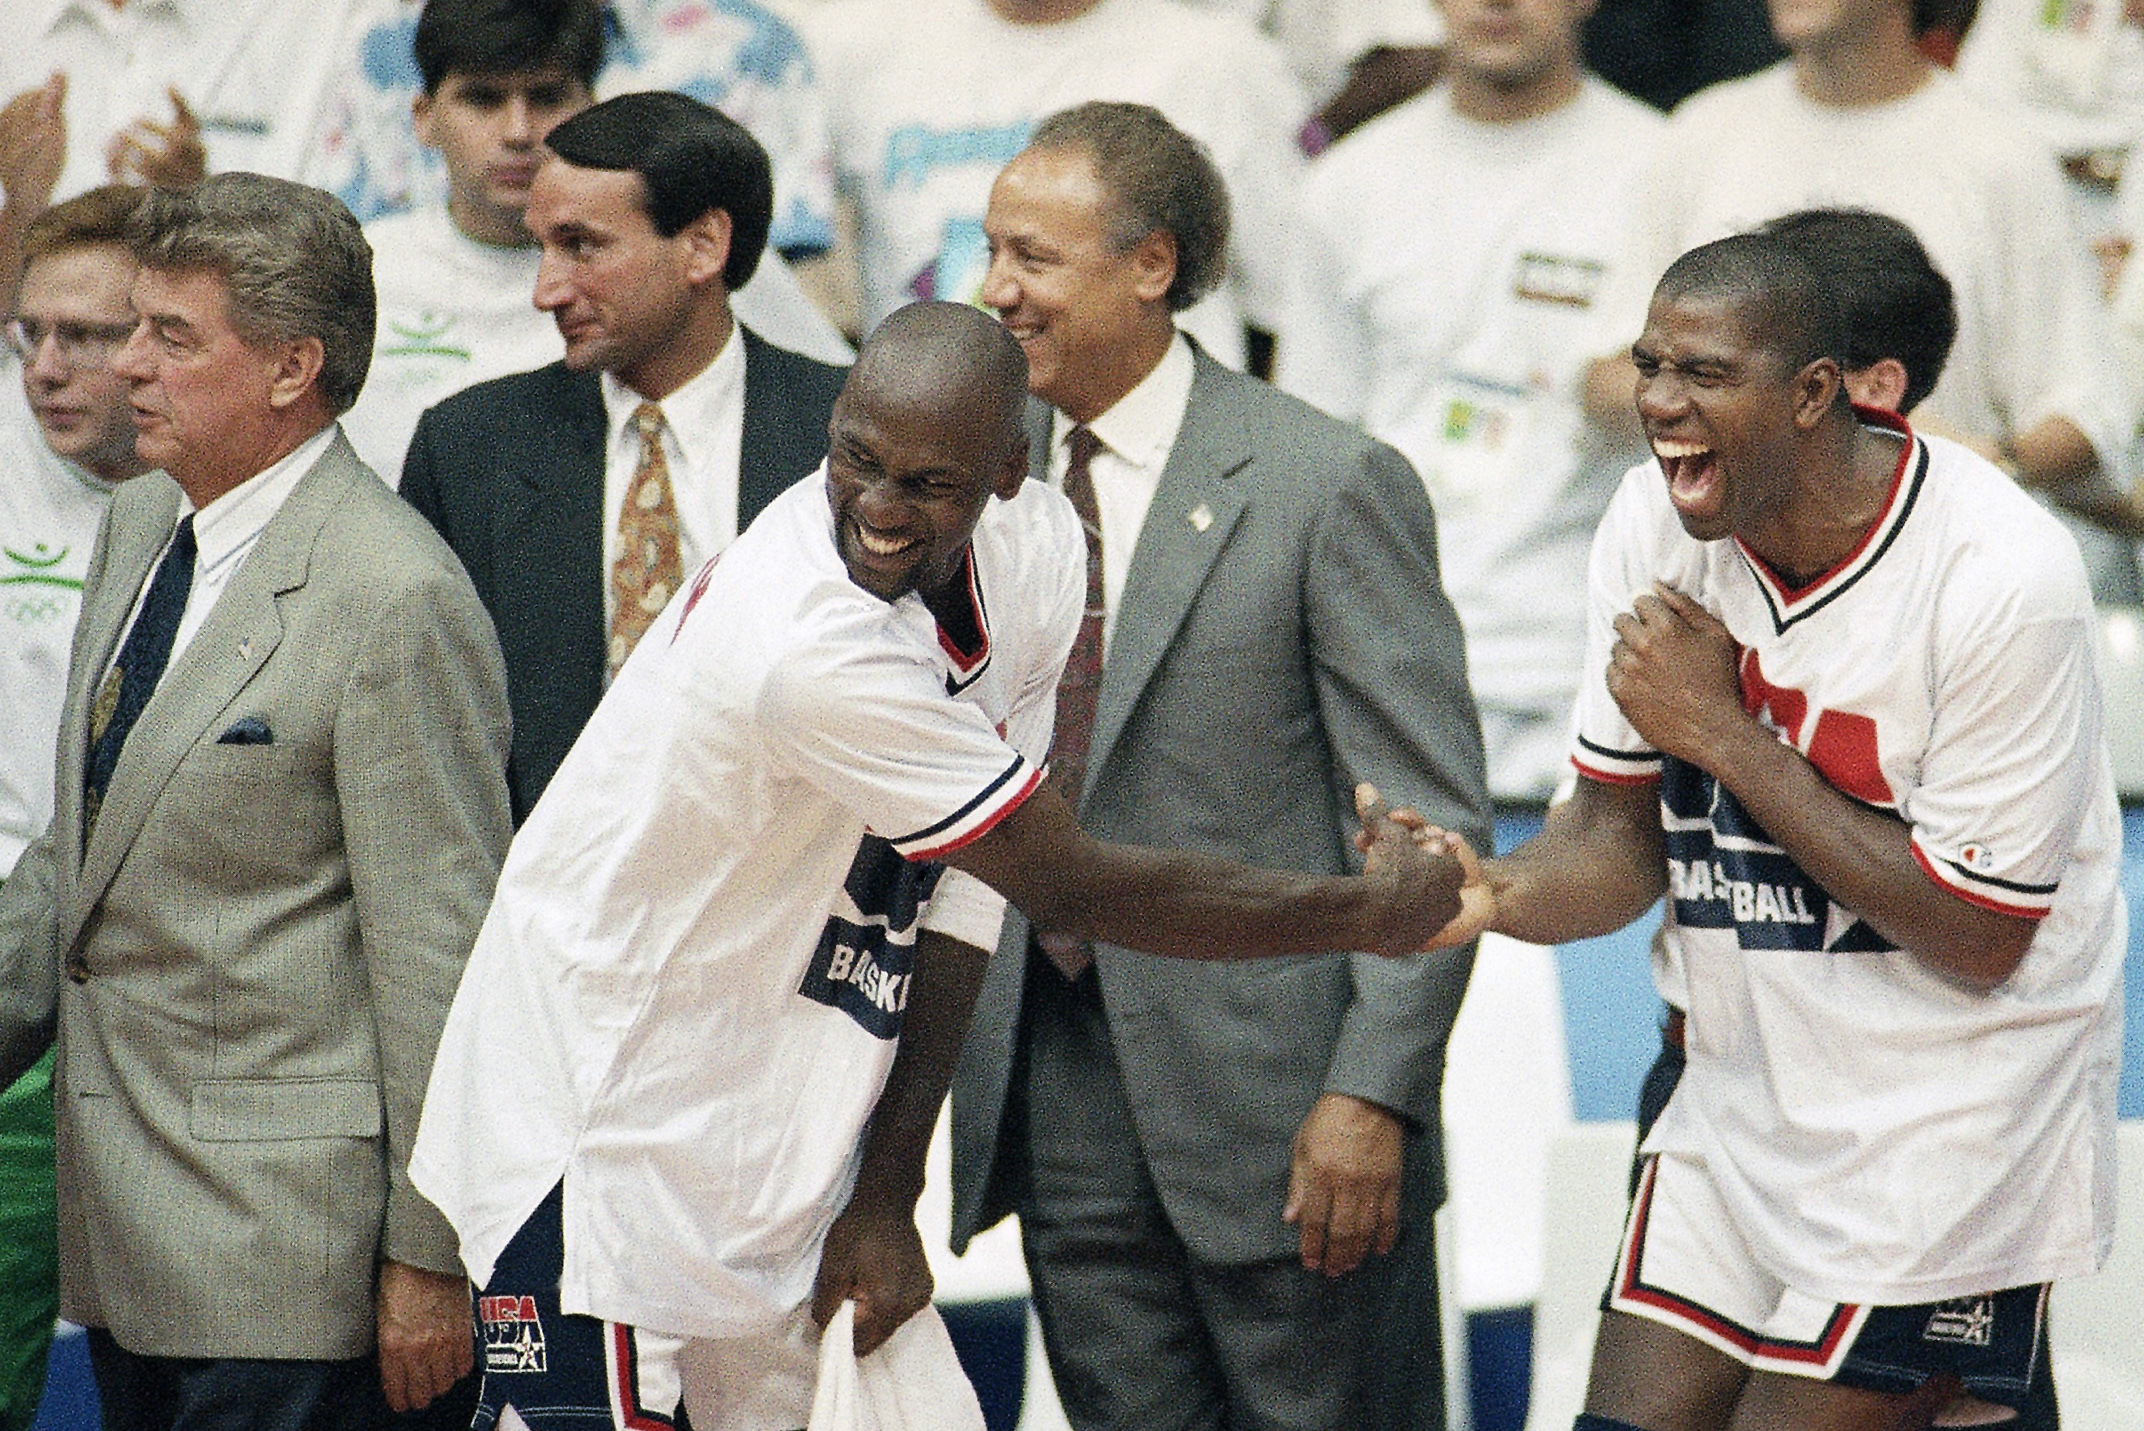 Sold! Michael Jordan's 'Dream Team' jersey sells for $216,000